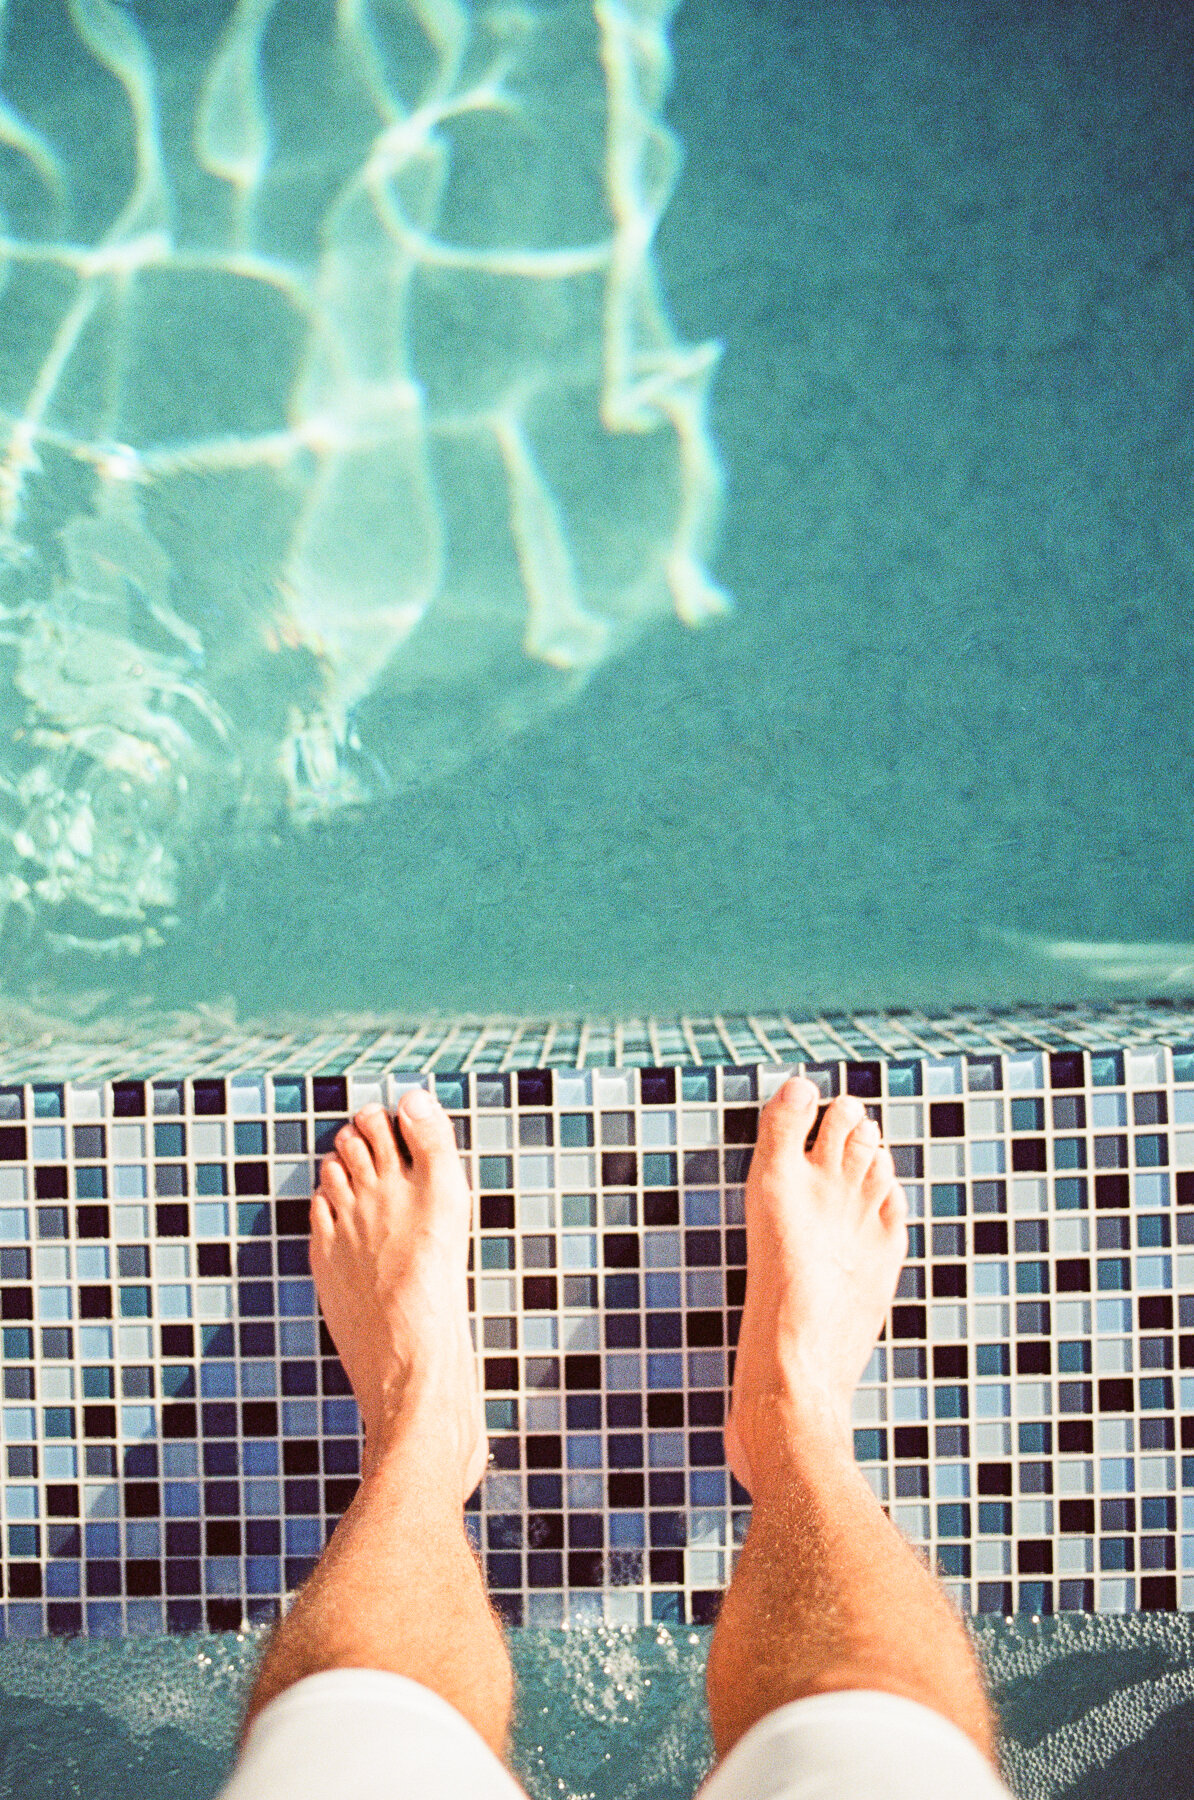 Leica-M6-Pool-Chloe-17.jpg